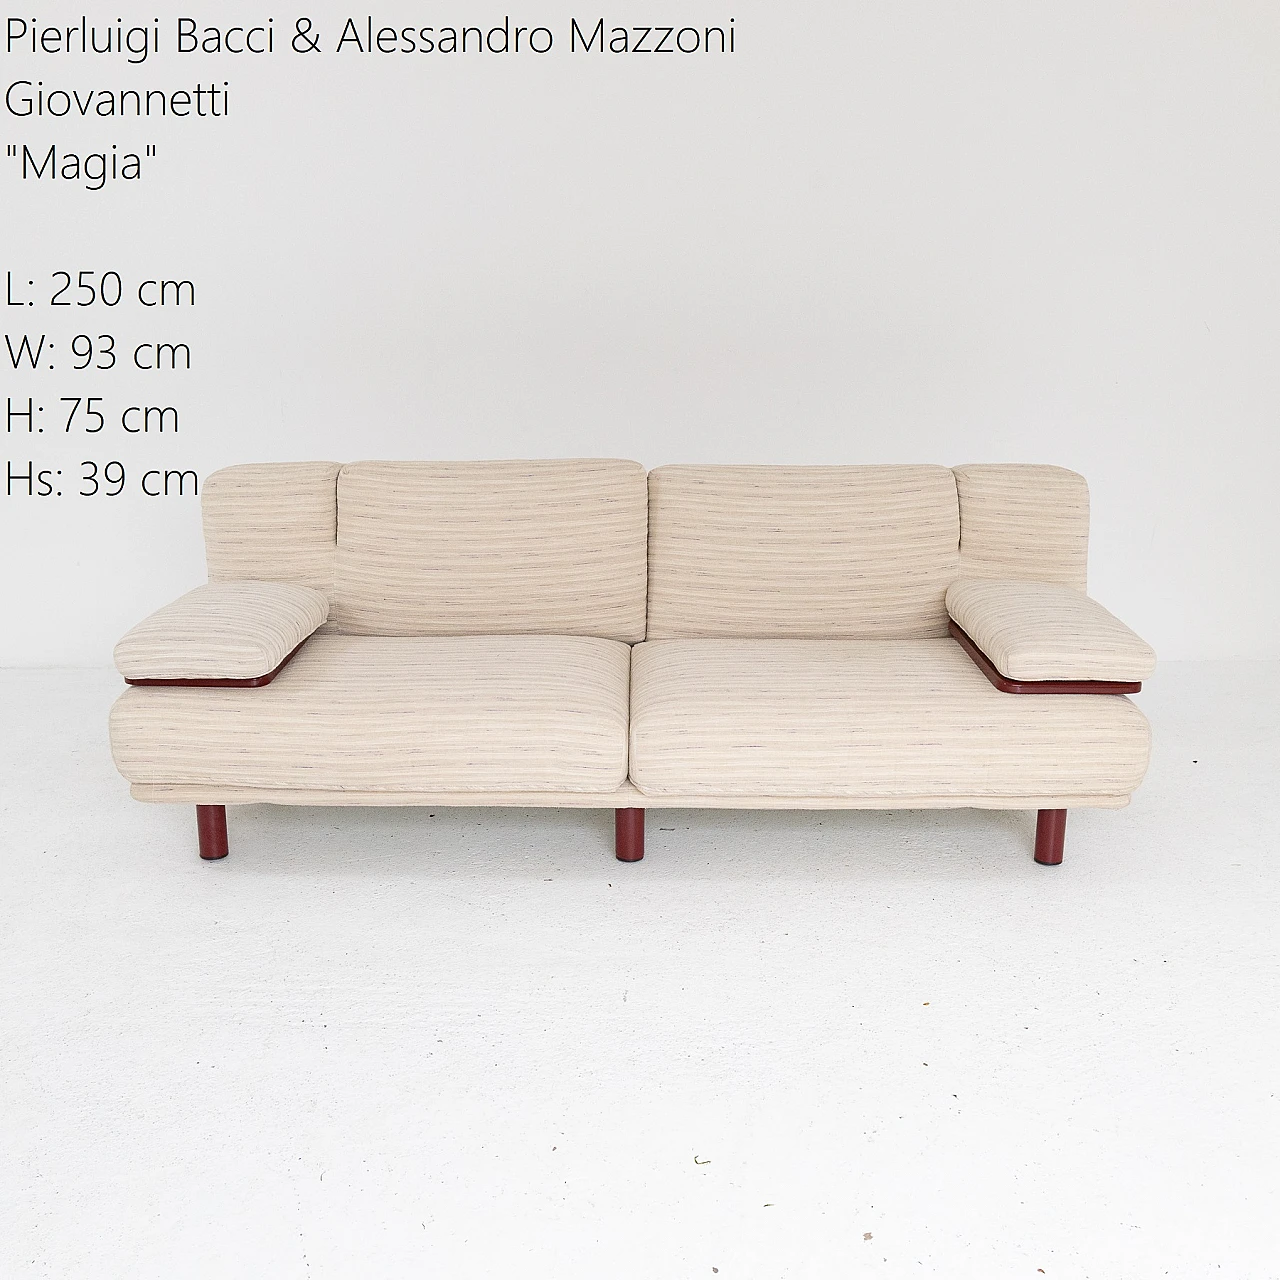 Magia sofa by P. Bacci and A. Mazzoni for Giovannetti, 1980s 3